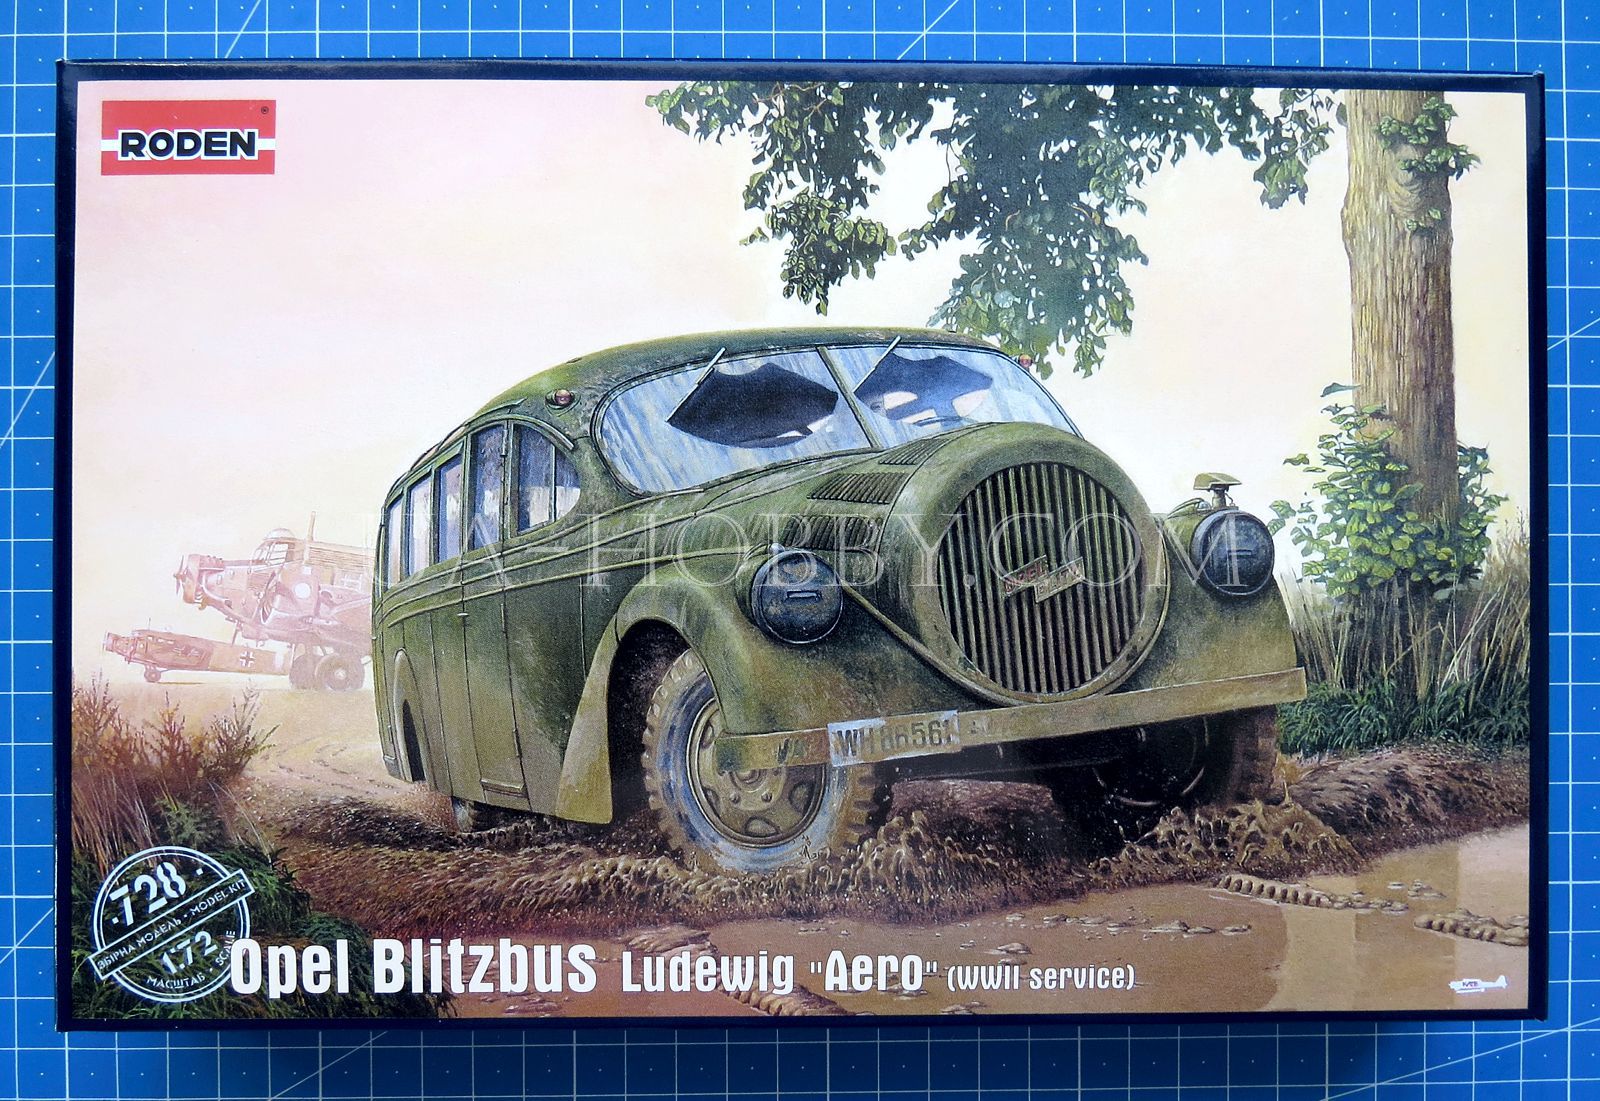 1/72 Opel Blitzbus Ludewig "Aero" (WWII service). Roden 728